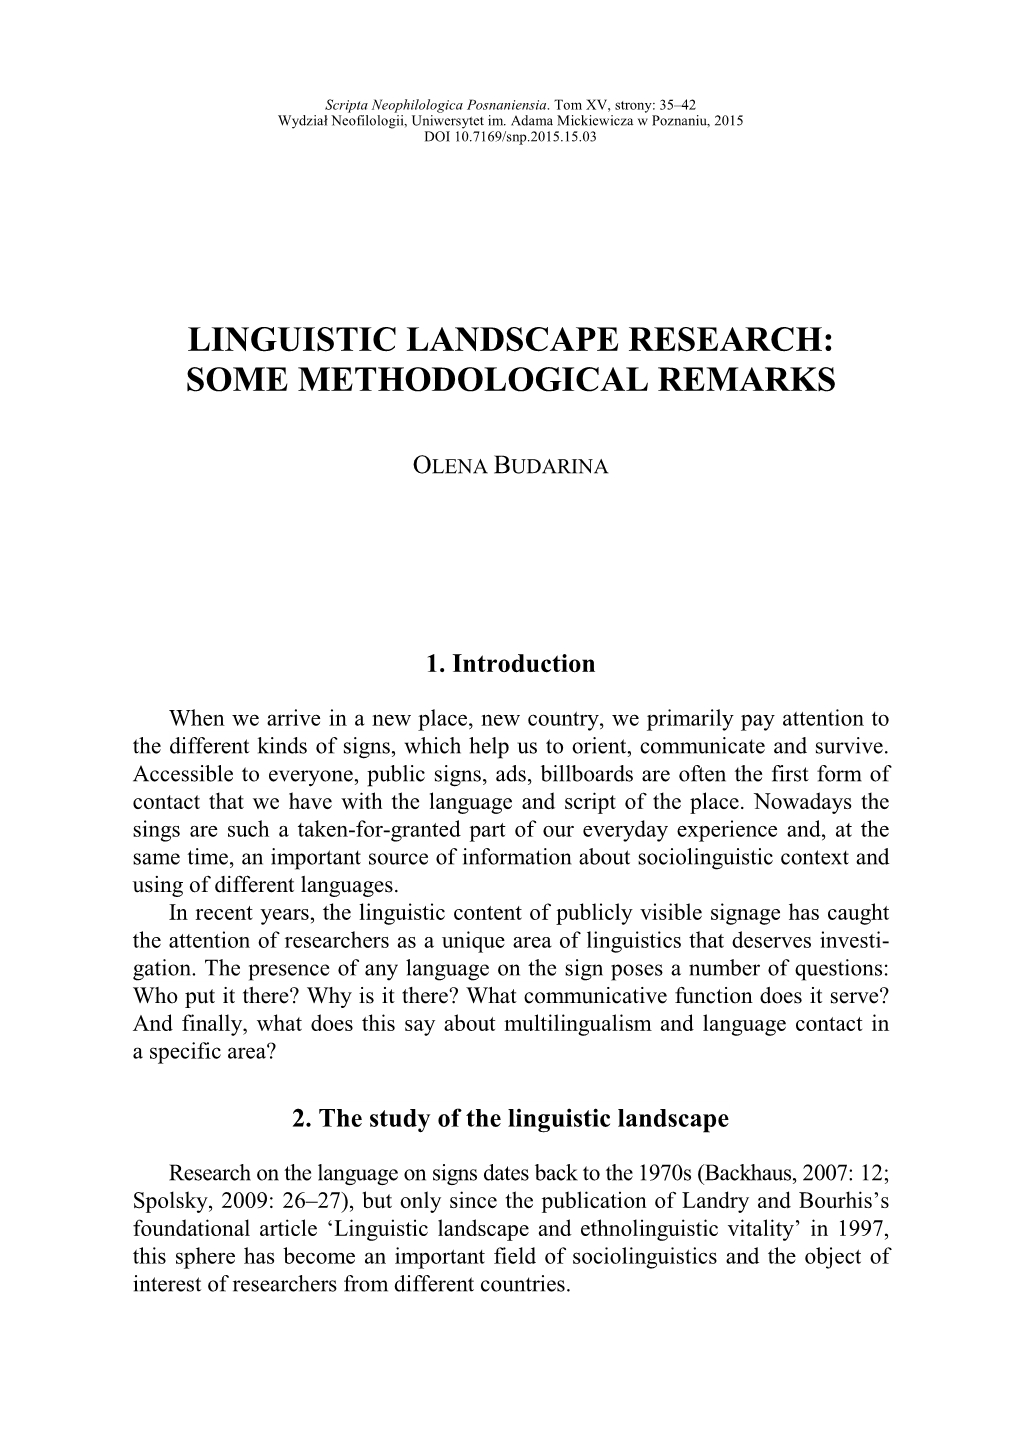 Linguistic Landscape Research: Some Methodological Remarks